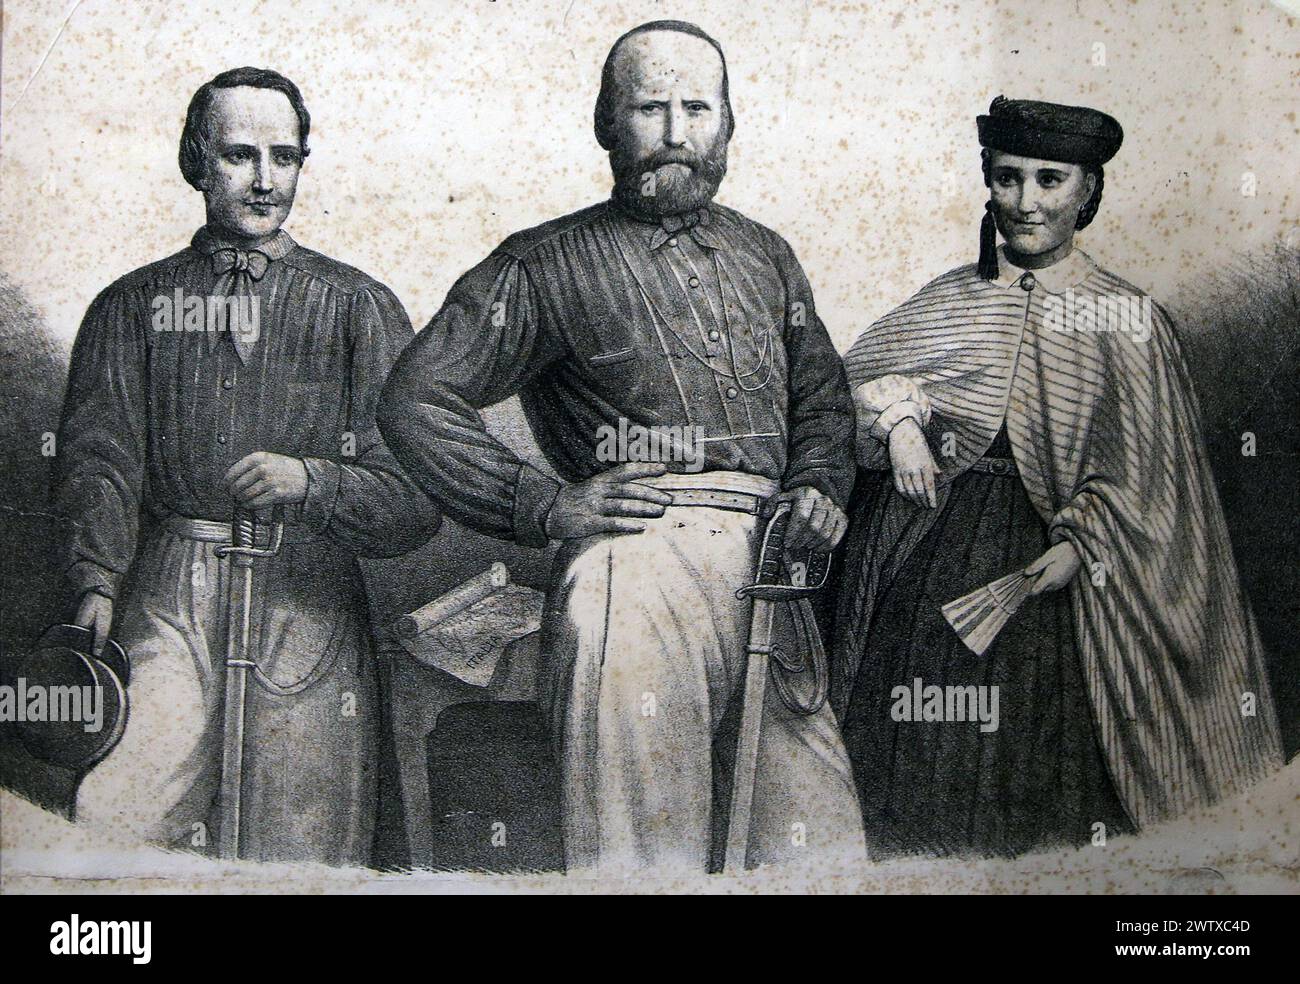 Giuseppe Garibaldi (1807-1882) with his son Menotti and daughter Teresa. Lithography, 19th century. Stock Photo